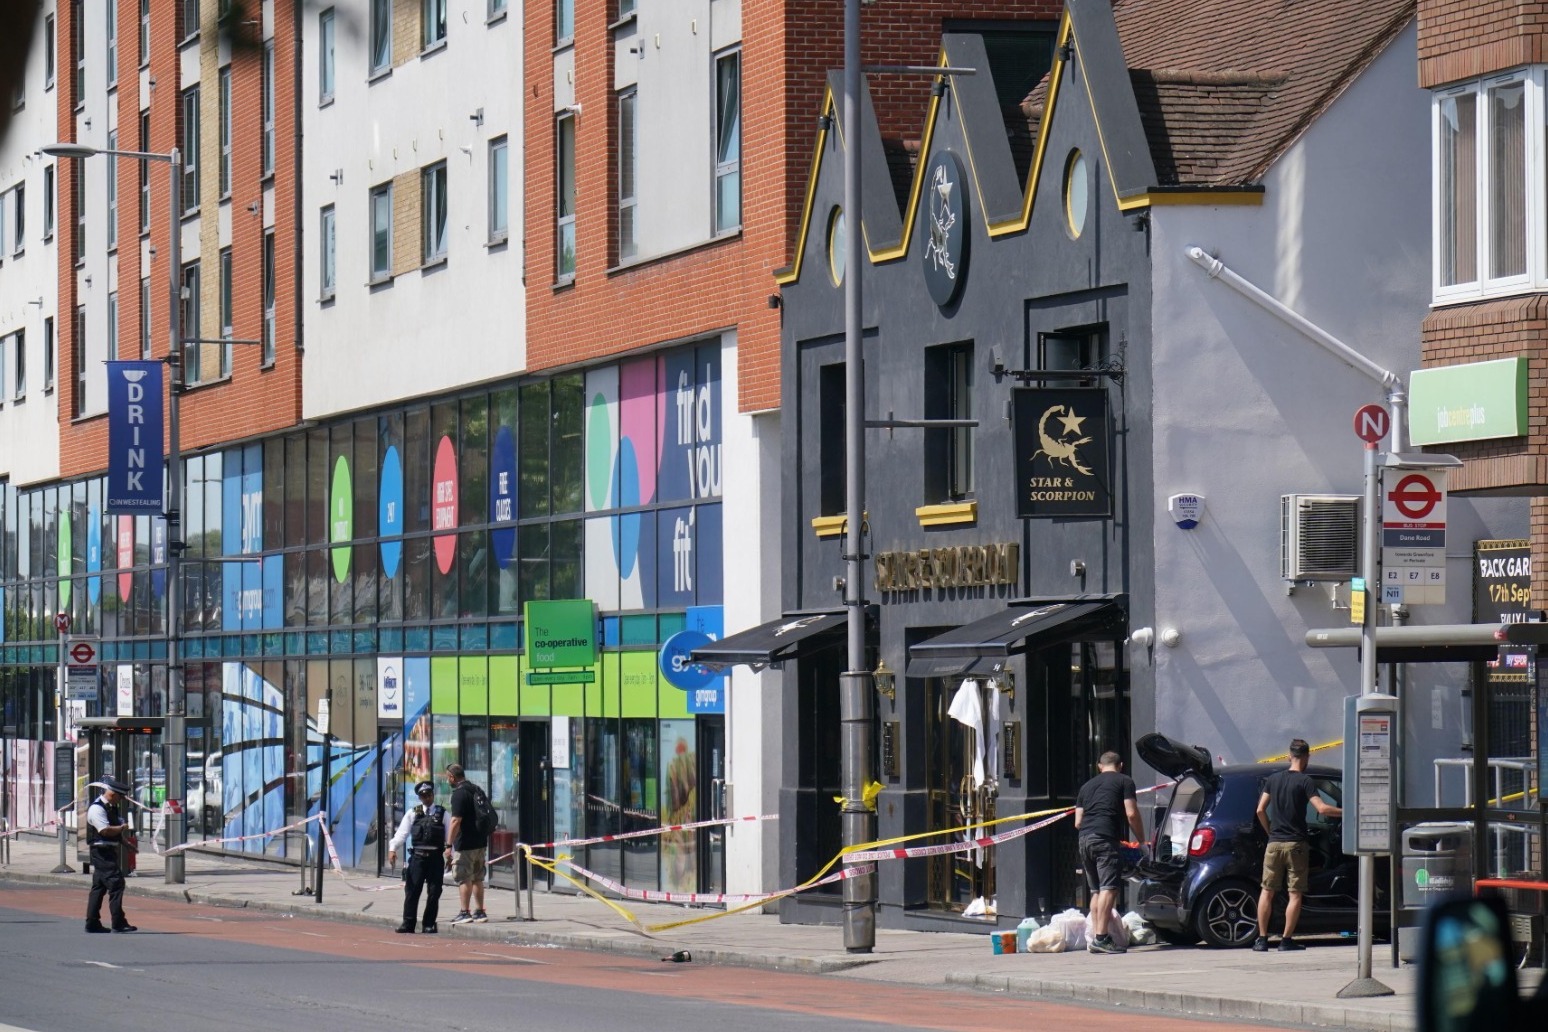 Man stabbed to death inside London pub 